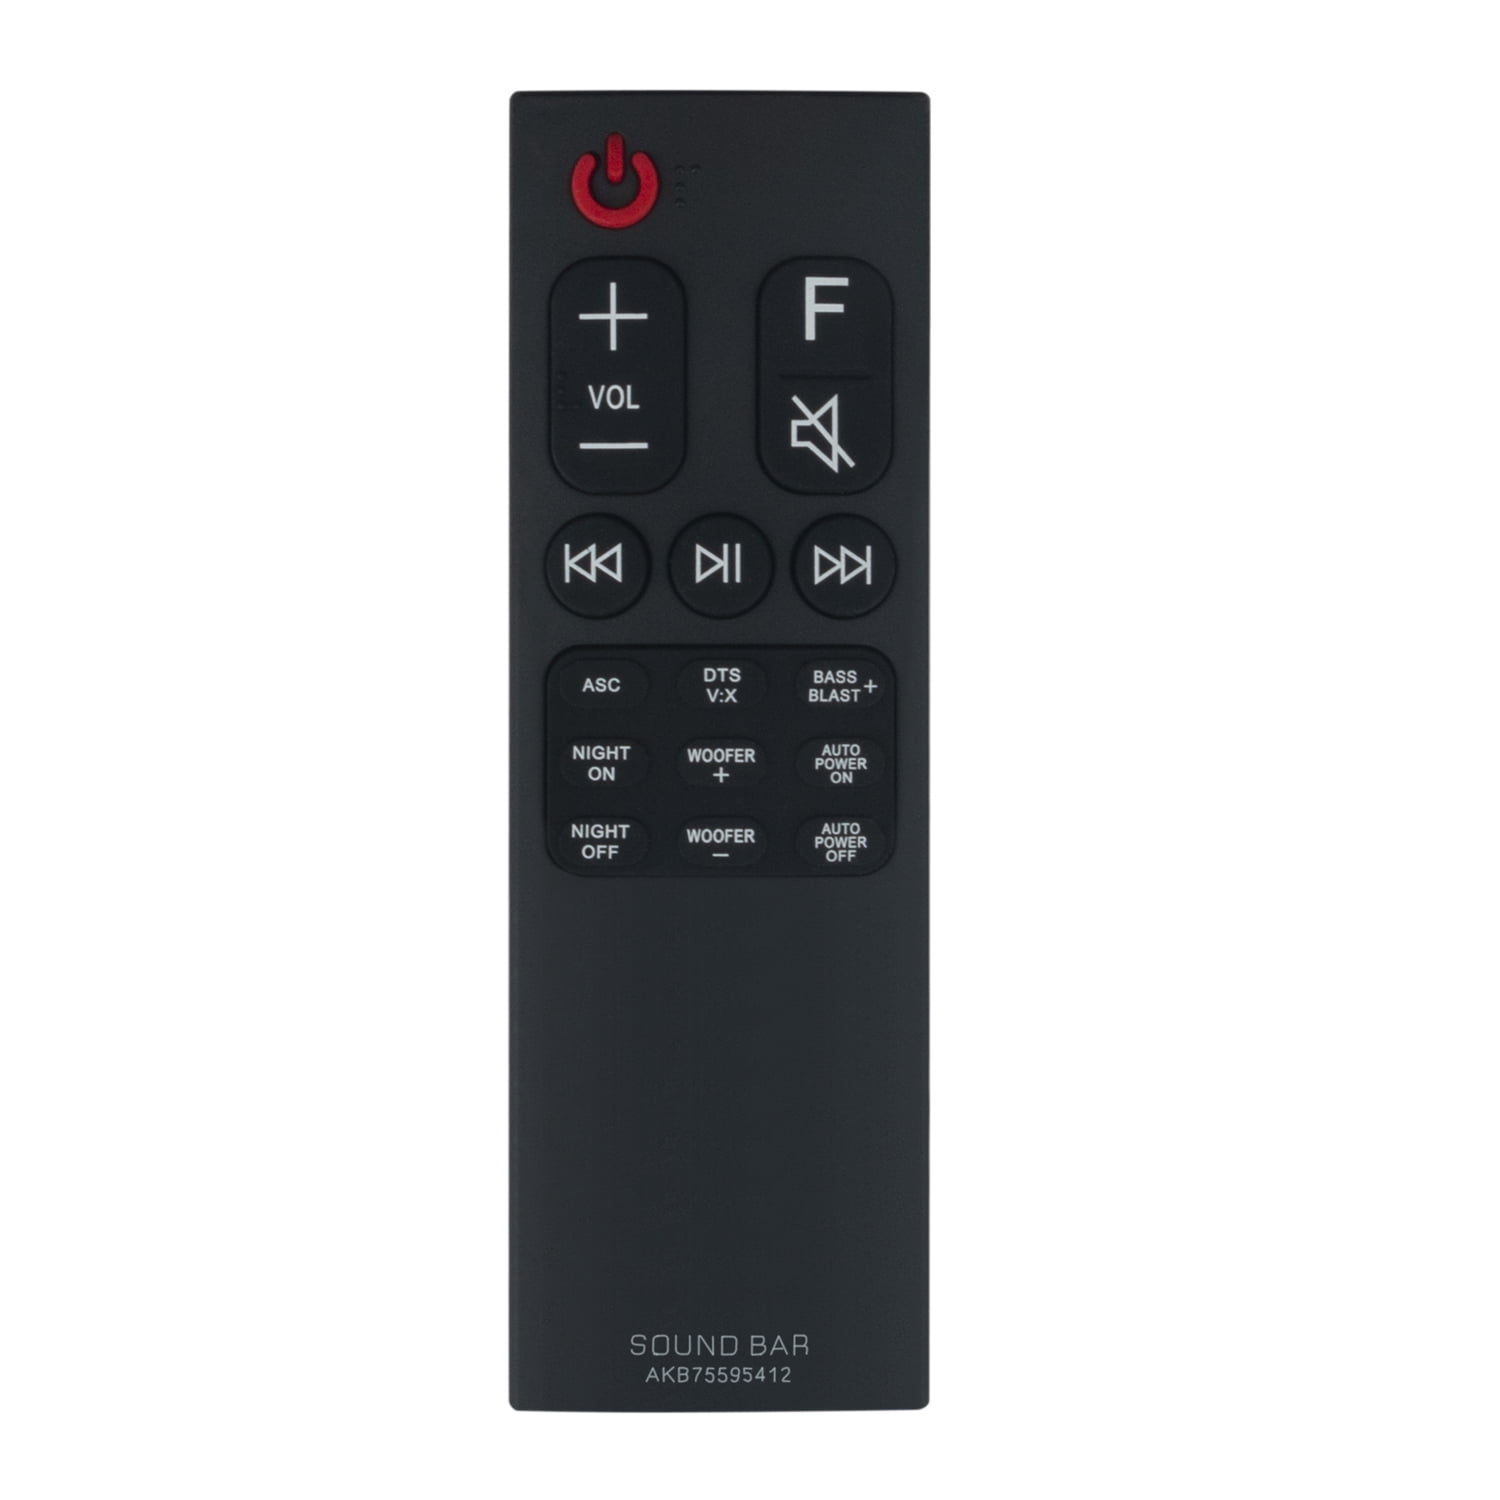 New RCA RTS7010B Home Theater Sound Bar Remote w/ Bluetooth